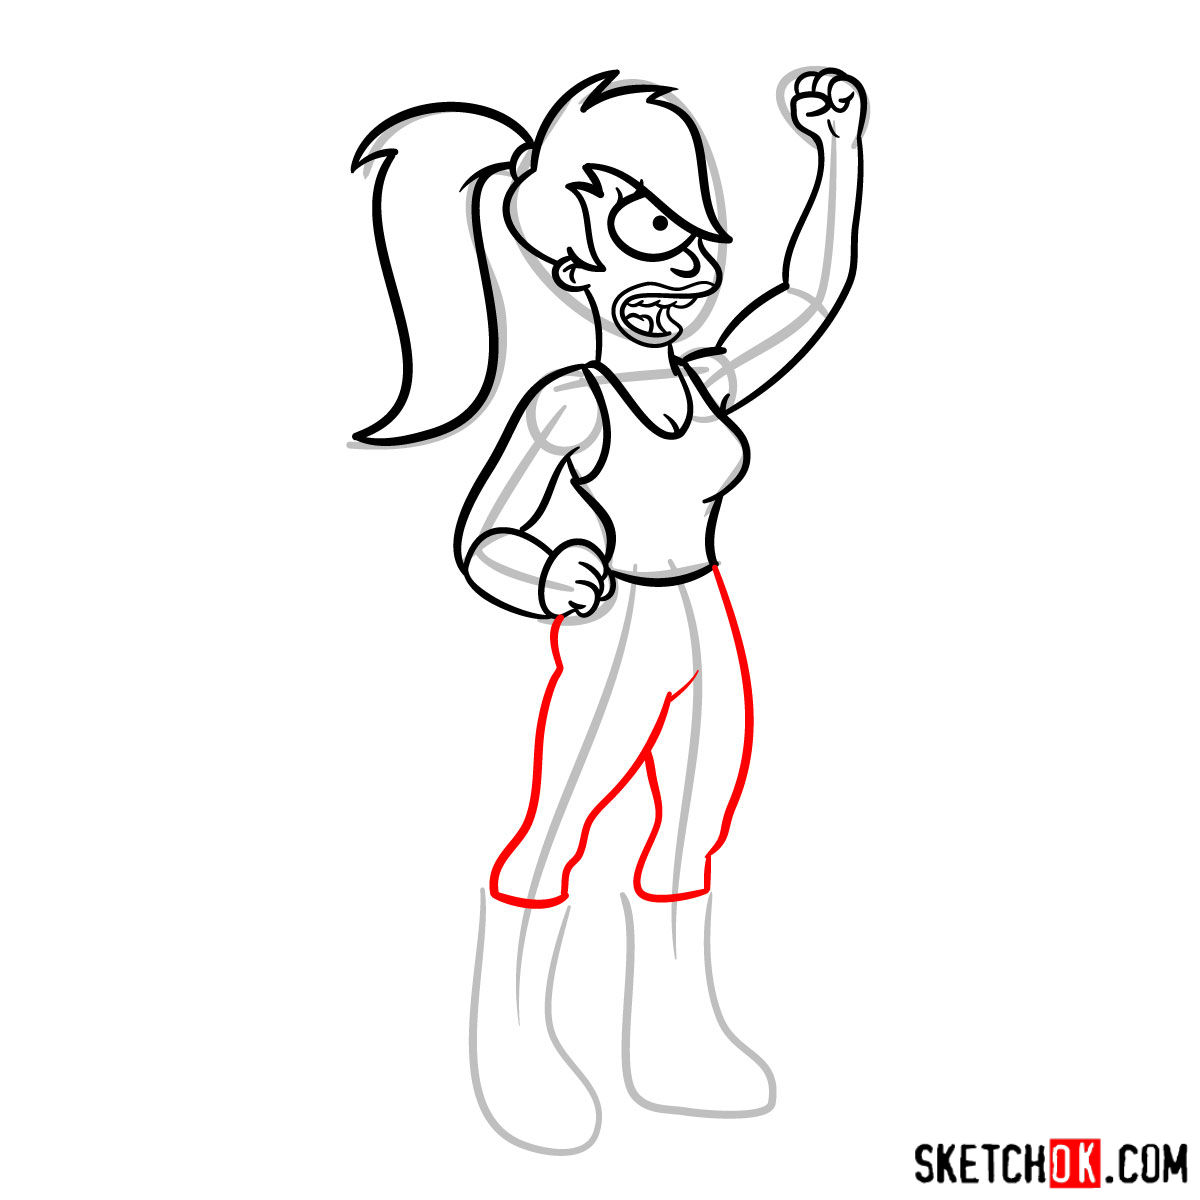 How to draw Leela from Futurama - step 10